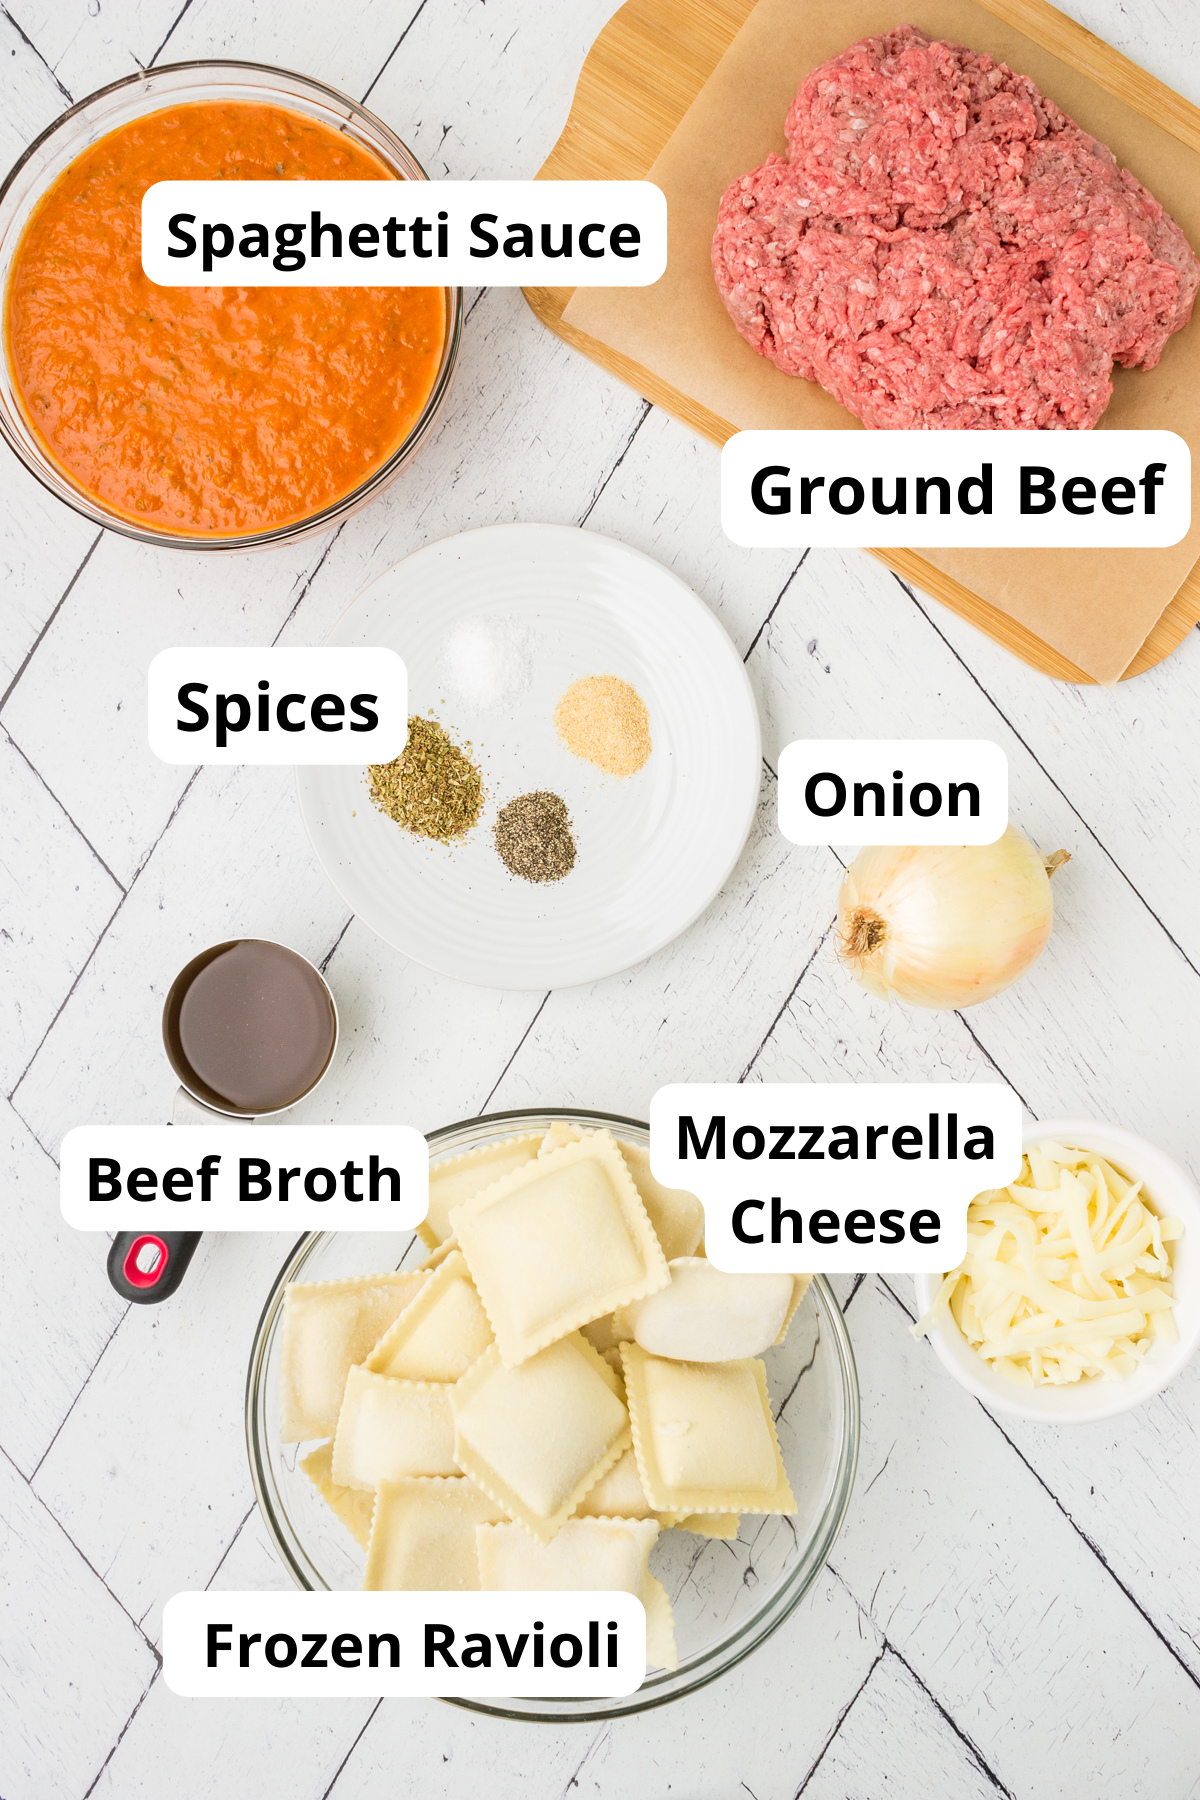 ingredients for this slow cooker ravioli lasagna